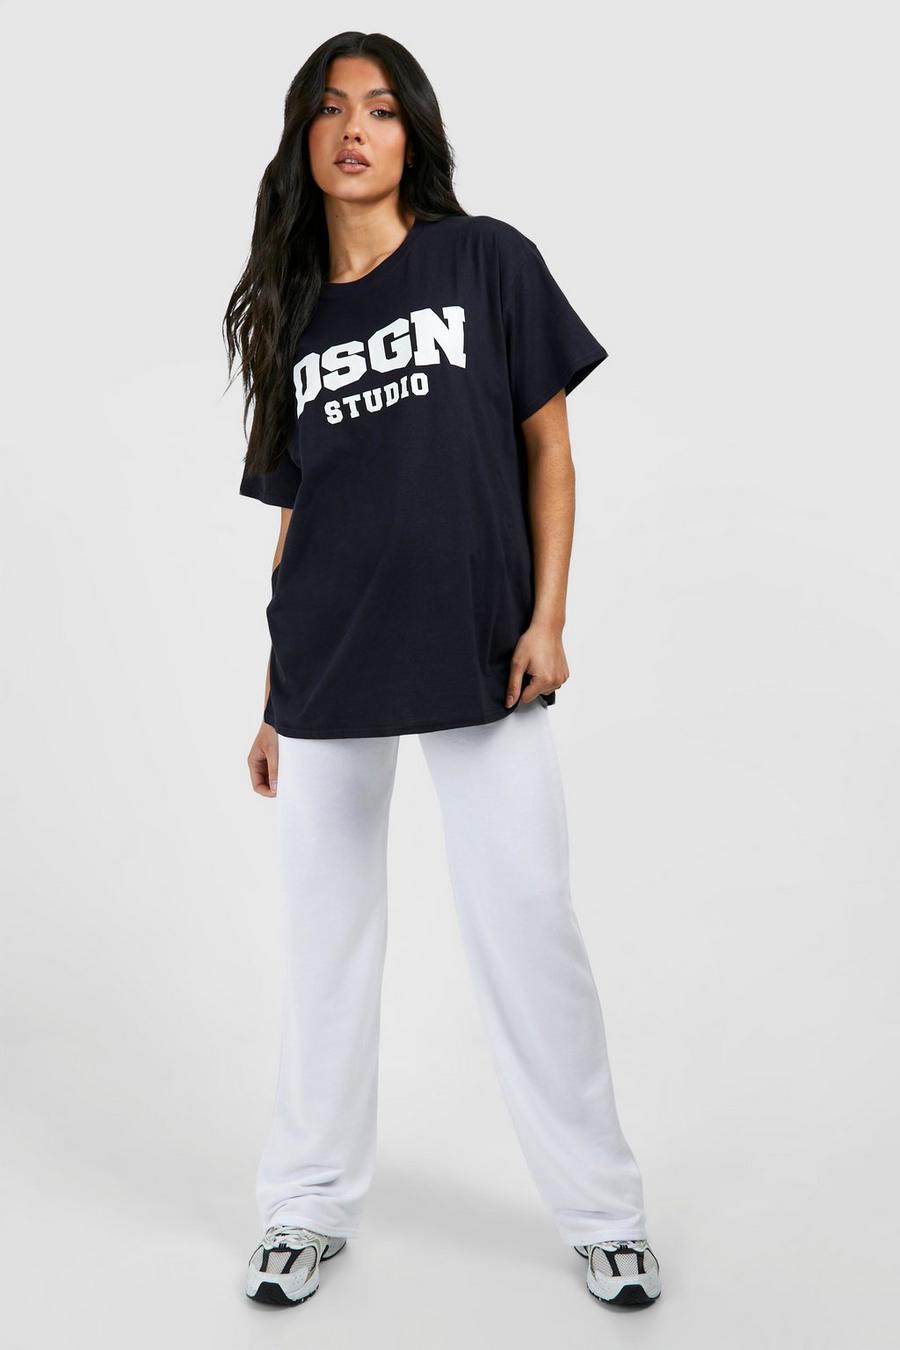 Tuta sportiva Premaman con T-shirt Dsgn Studio, Navy image number 1